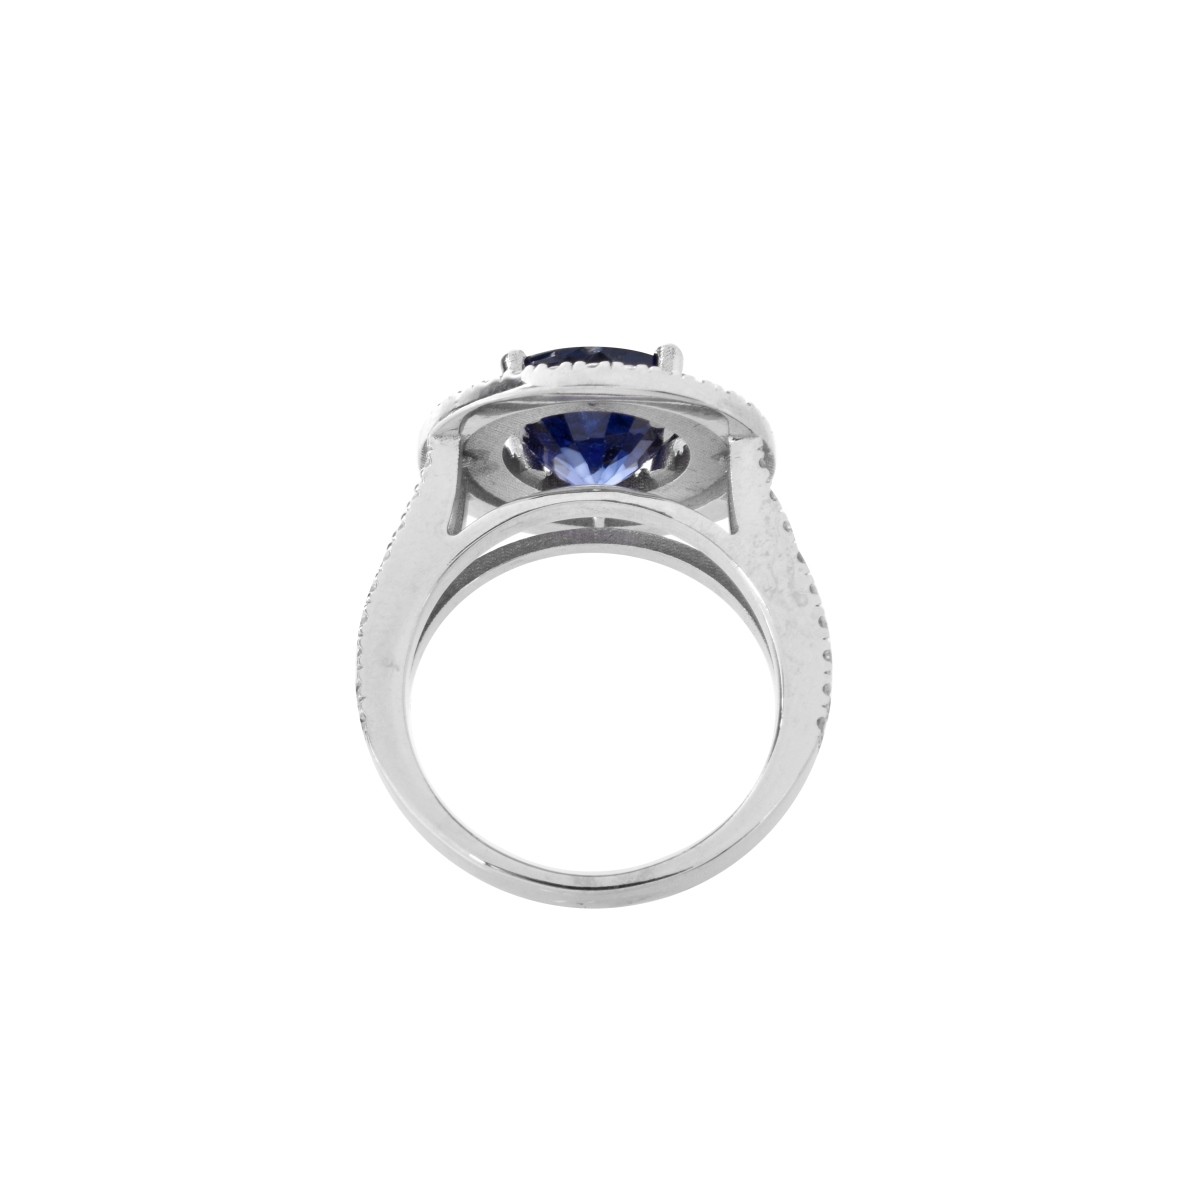 AIG Sapphire, Diamond and 14K Ring